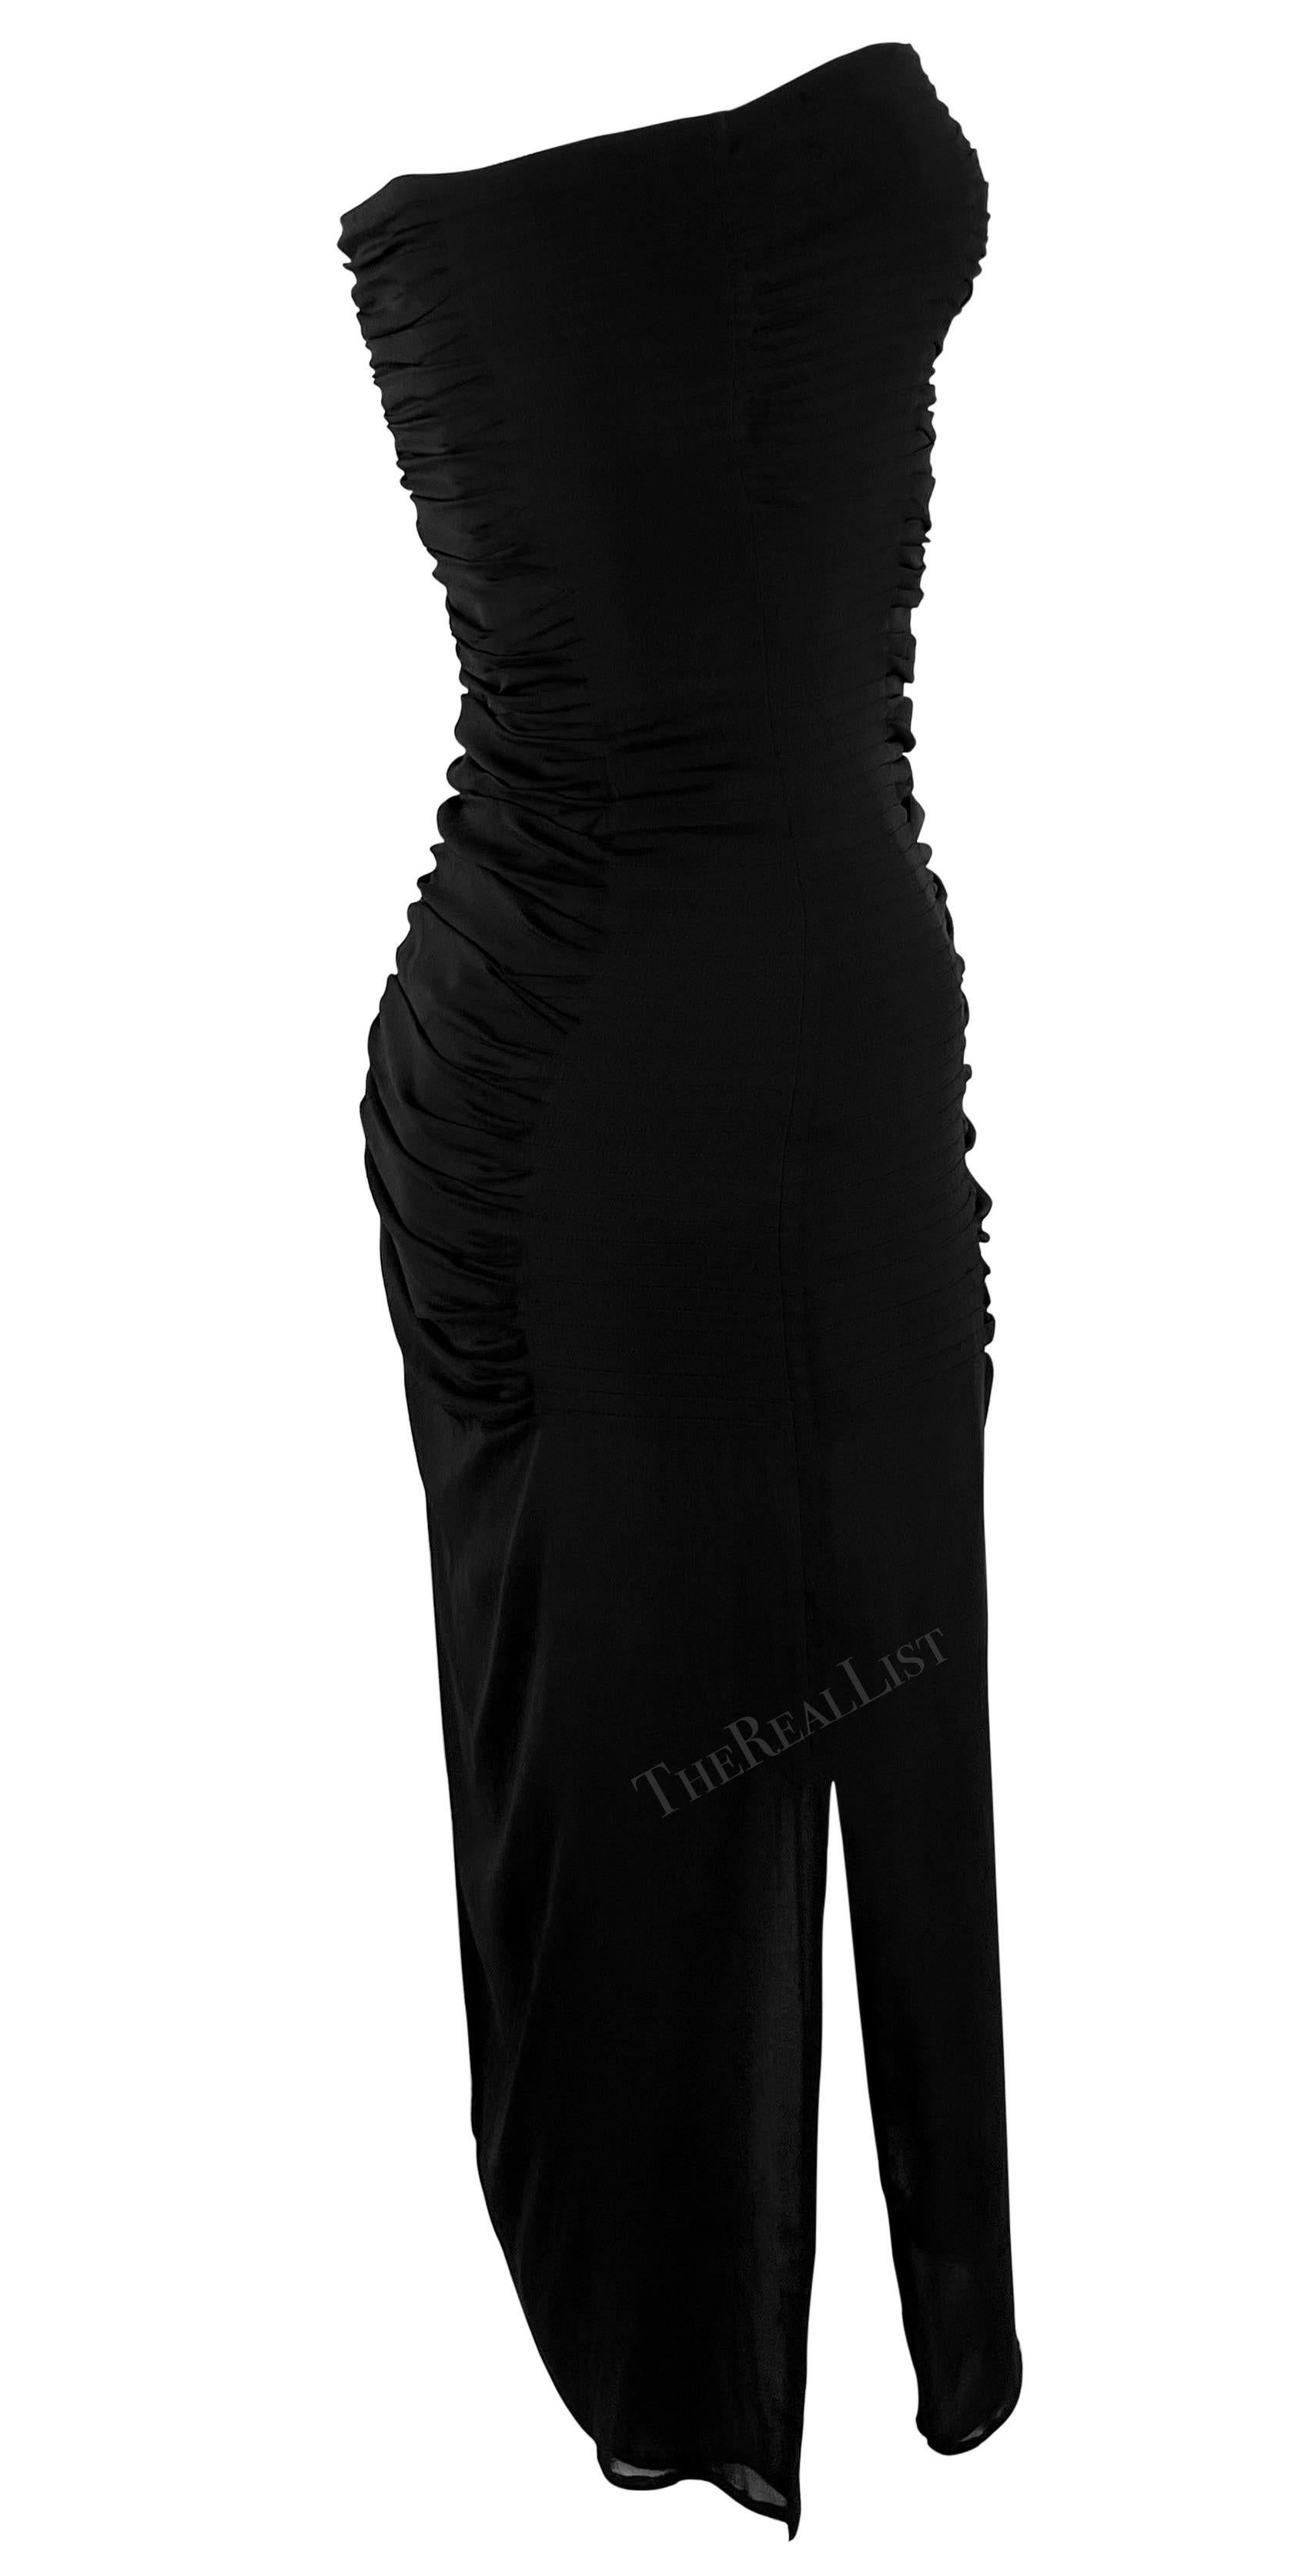 S/S 2001 Yves Saint Laurent by Tom Ford Sheer Black Pleated Strapless Mini Dress For Sale 3